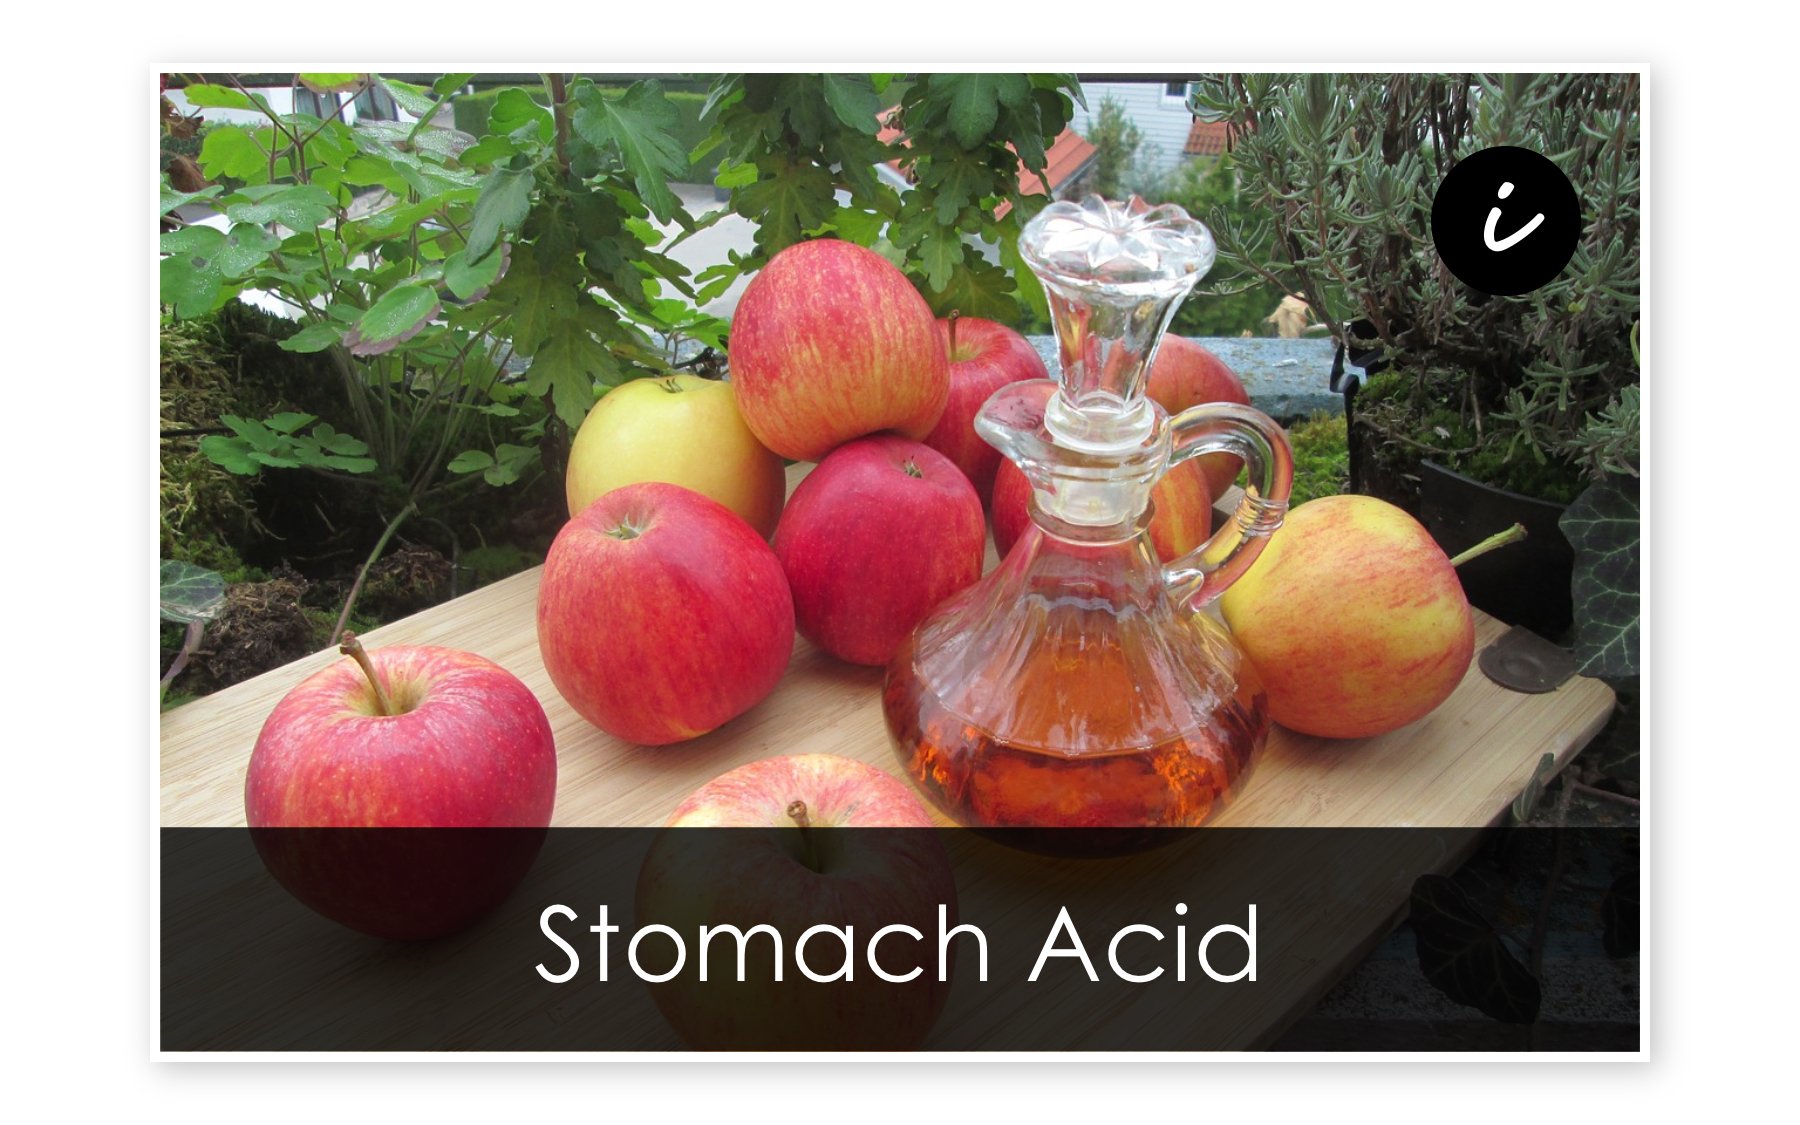 Stomach Acid - Digestive Enzymes